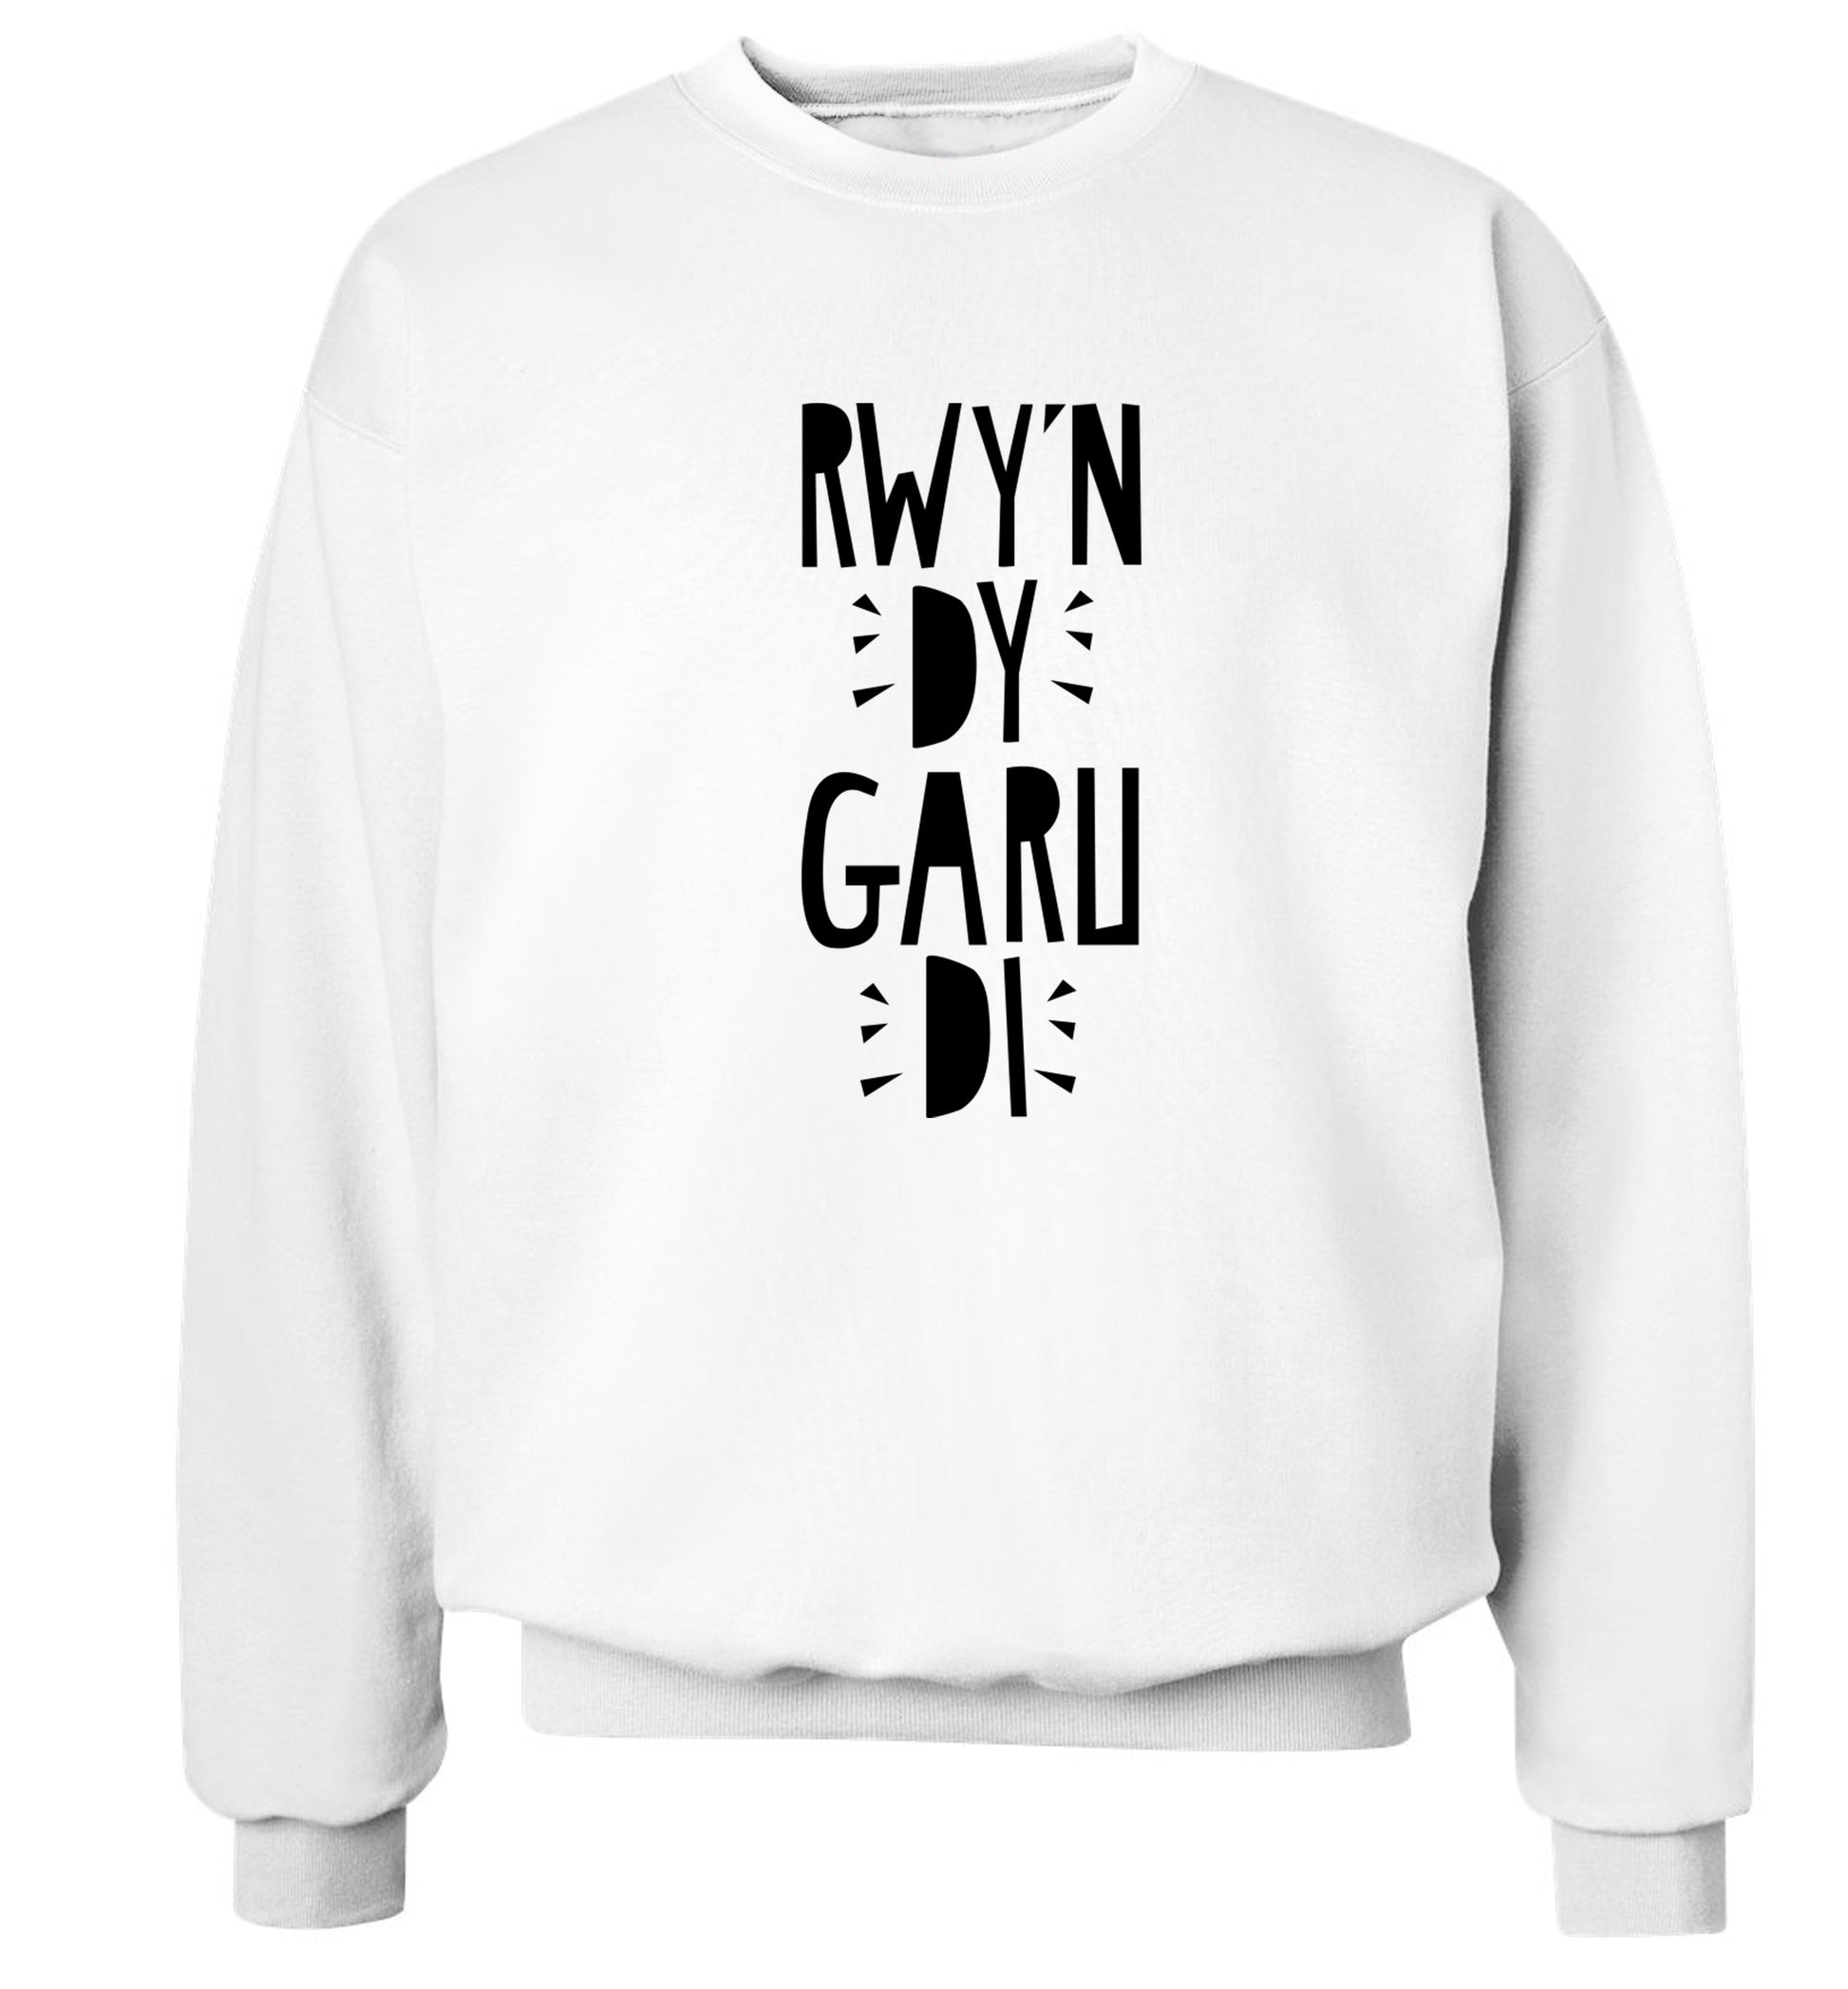 Rwy'n dy garu di - I love you Adult's unisex white Sweater 2XL